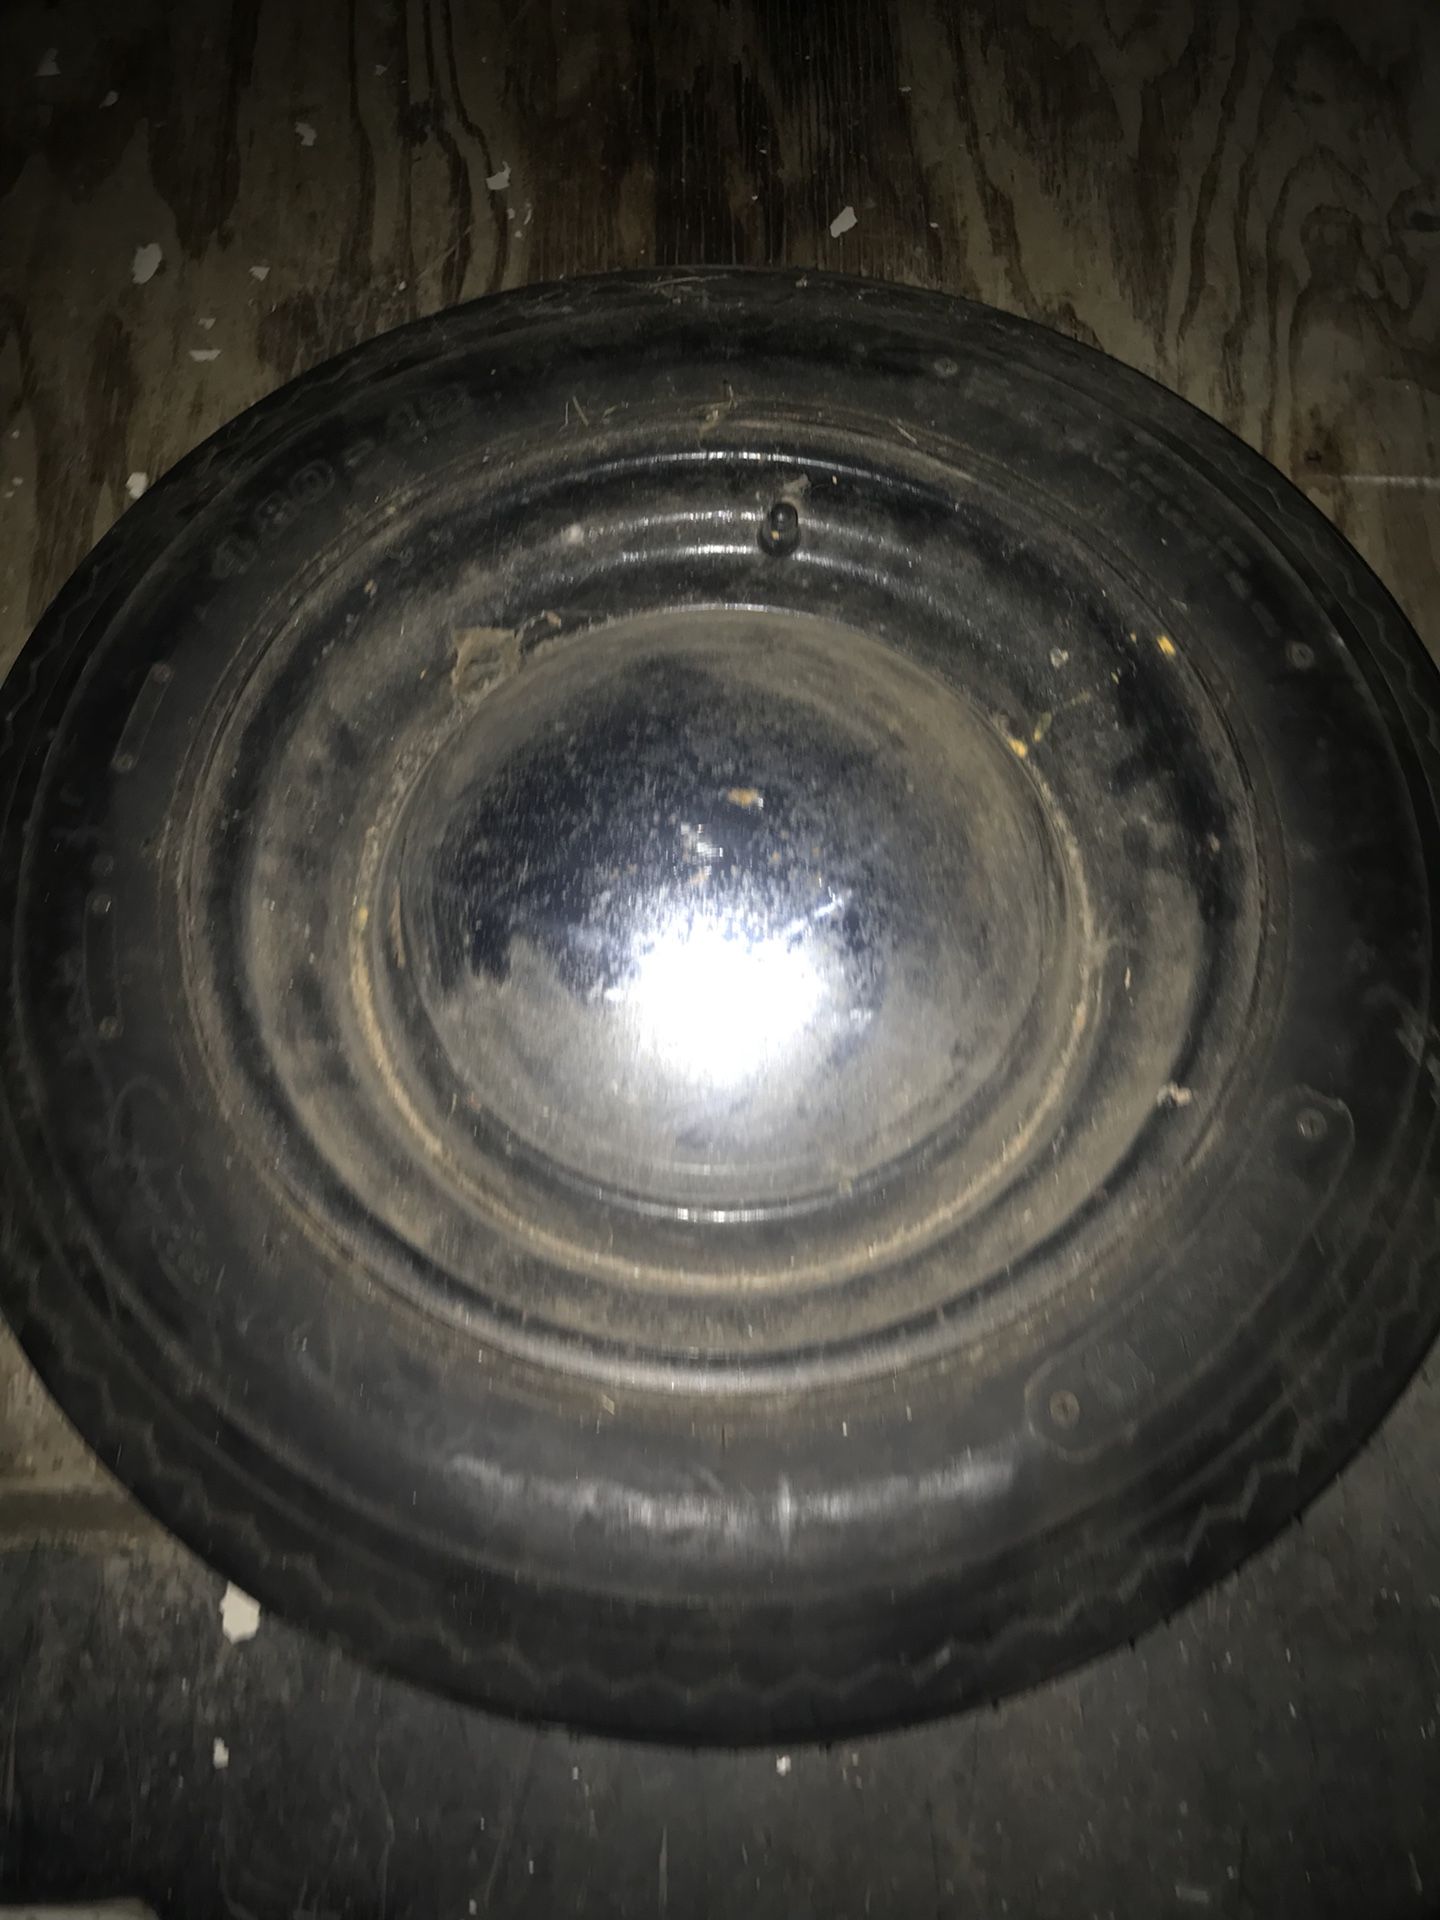 Camper/trailer spare tire